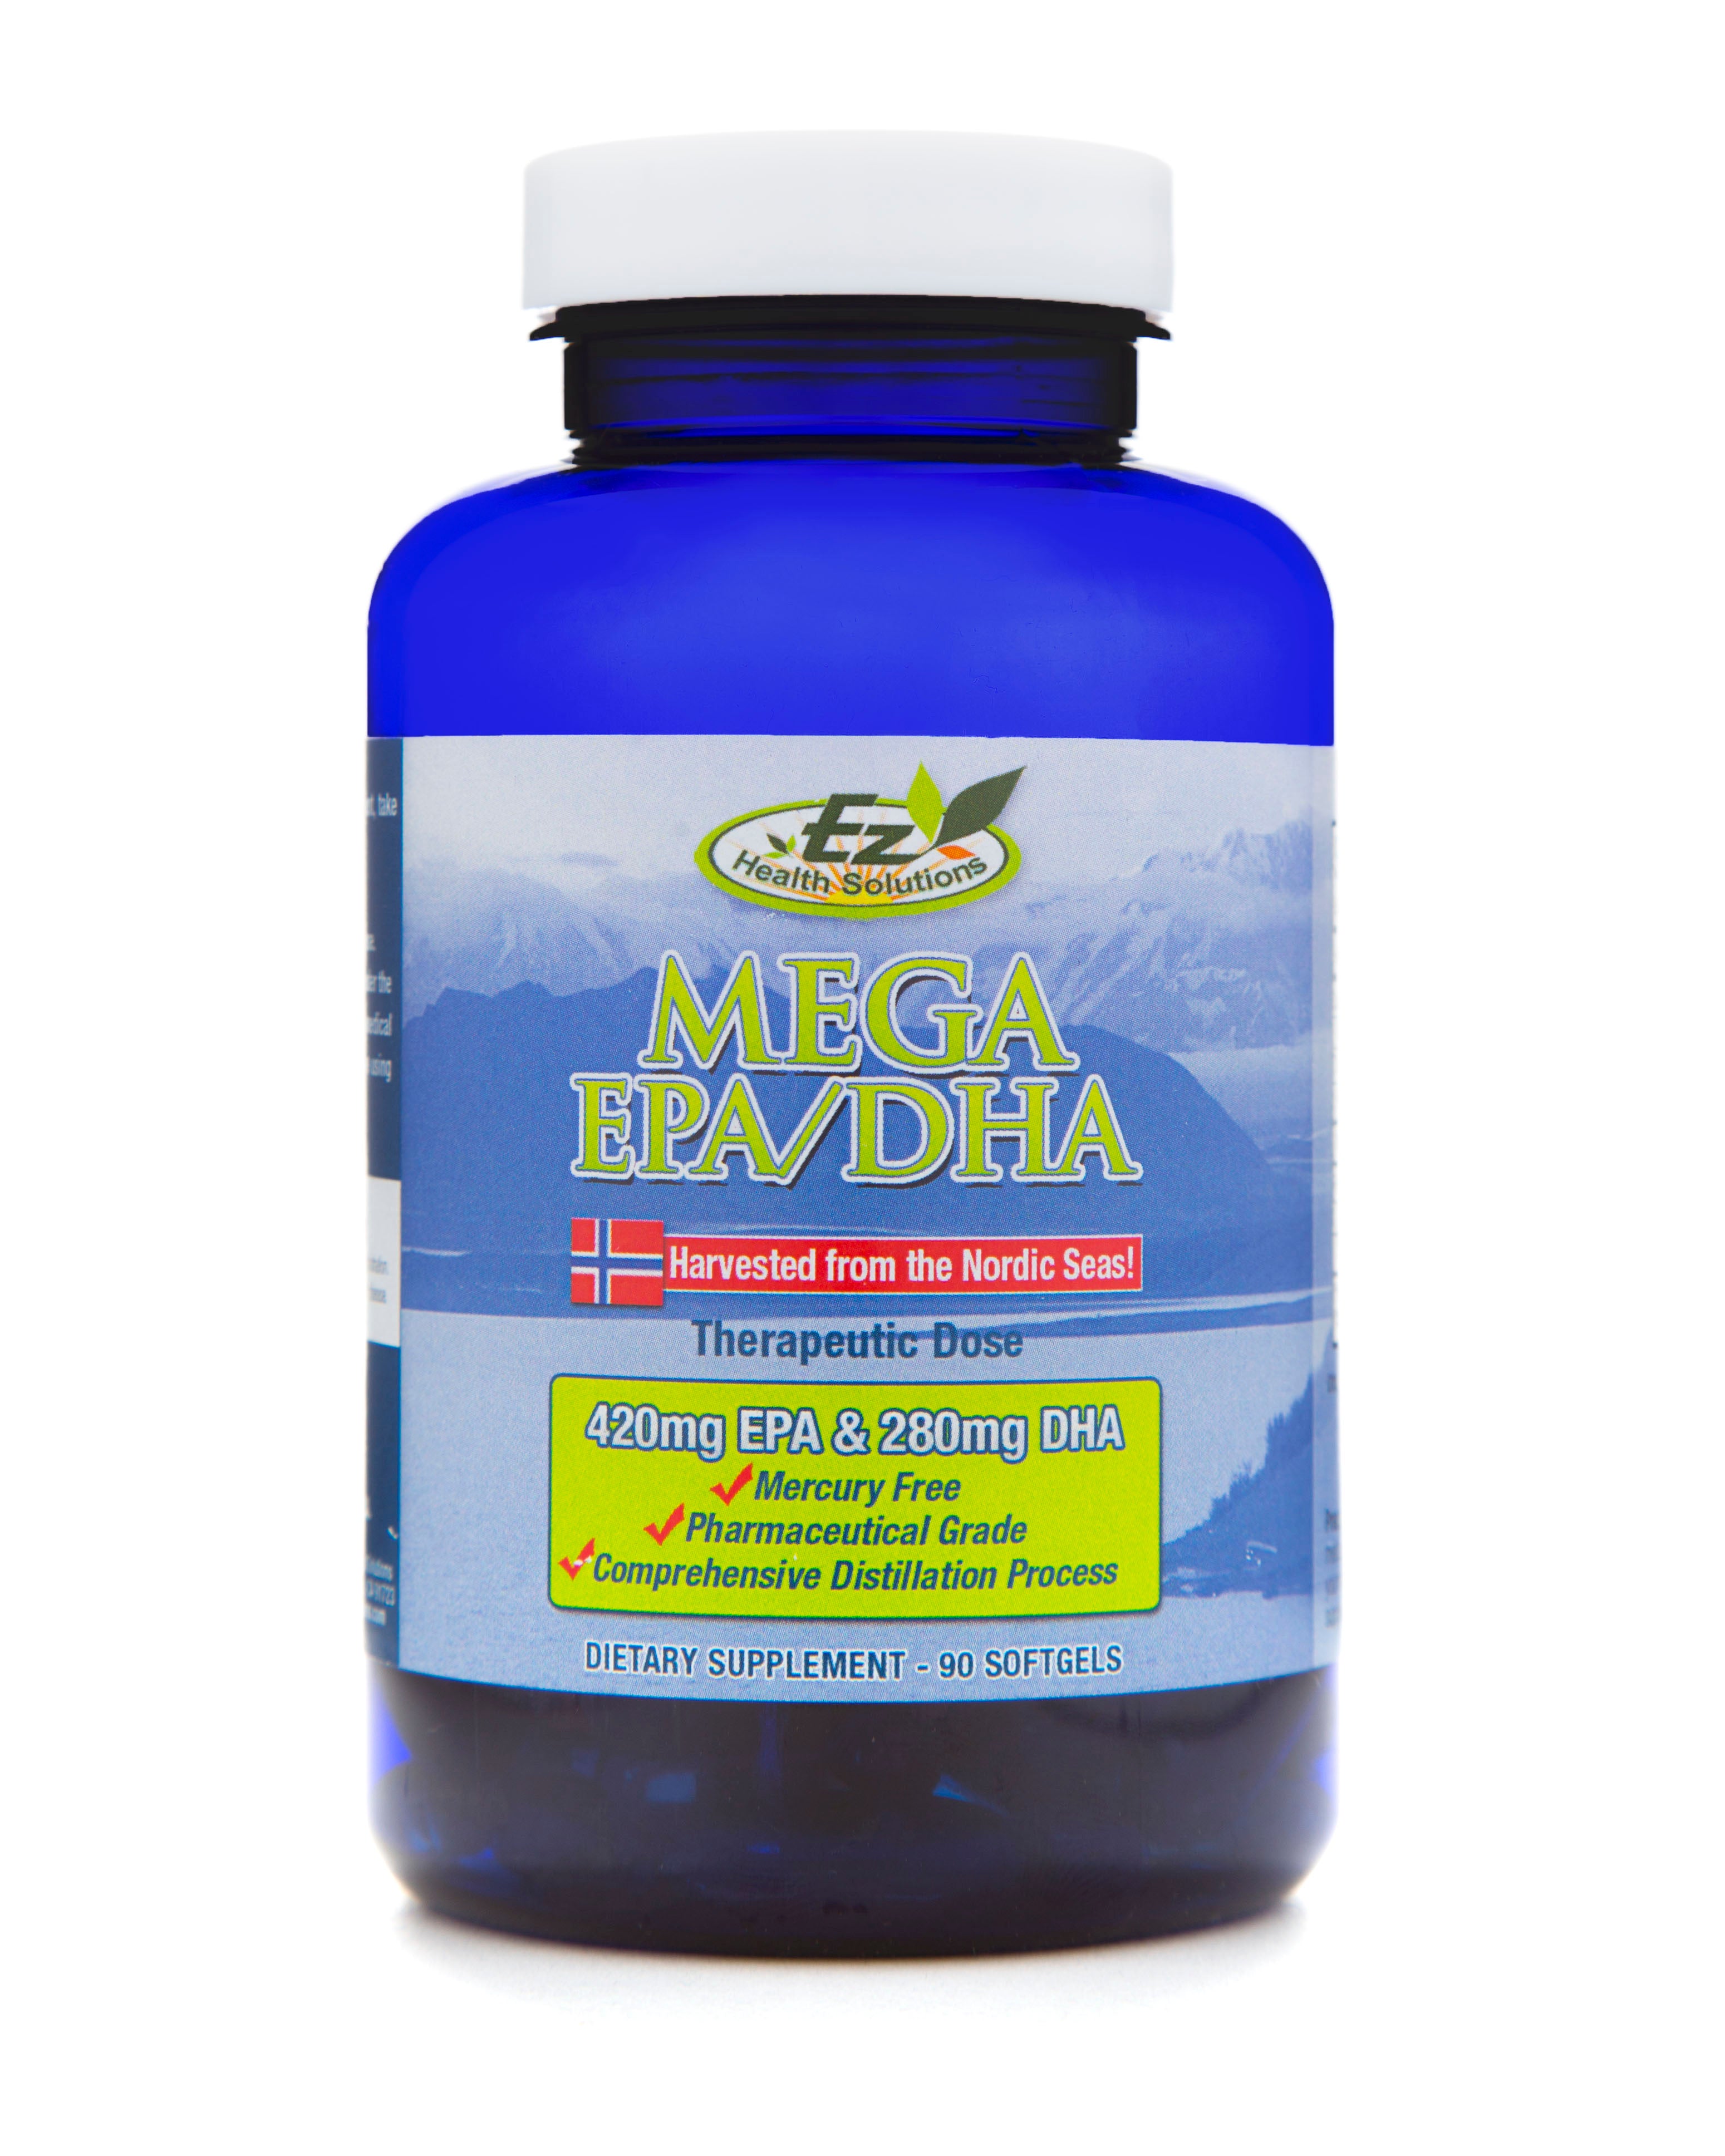 Men's Everyday Essential Supplements: Men's Ulta Multivitamin, Mega EPA/DHA Fish Oil and EZ Daily Greens Powder - EZ Health Solutions